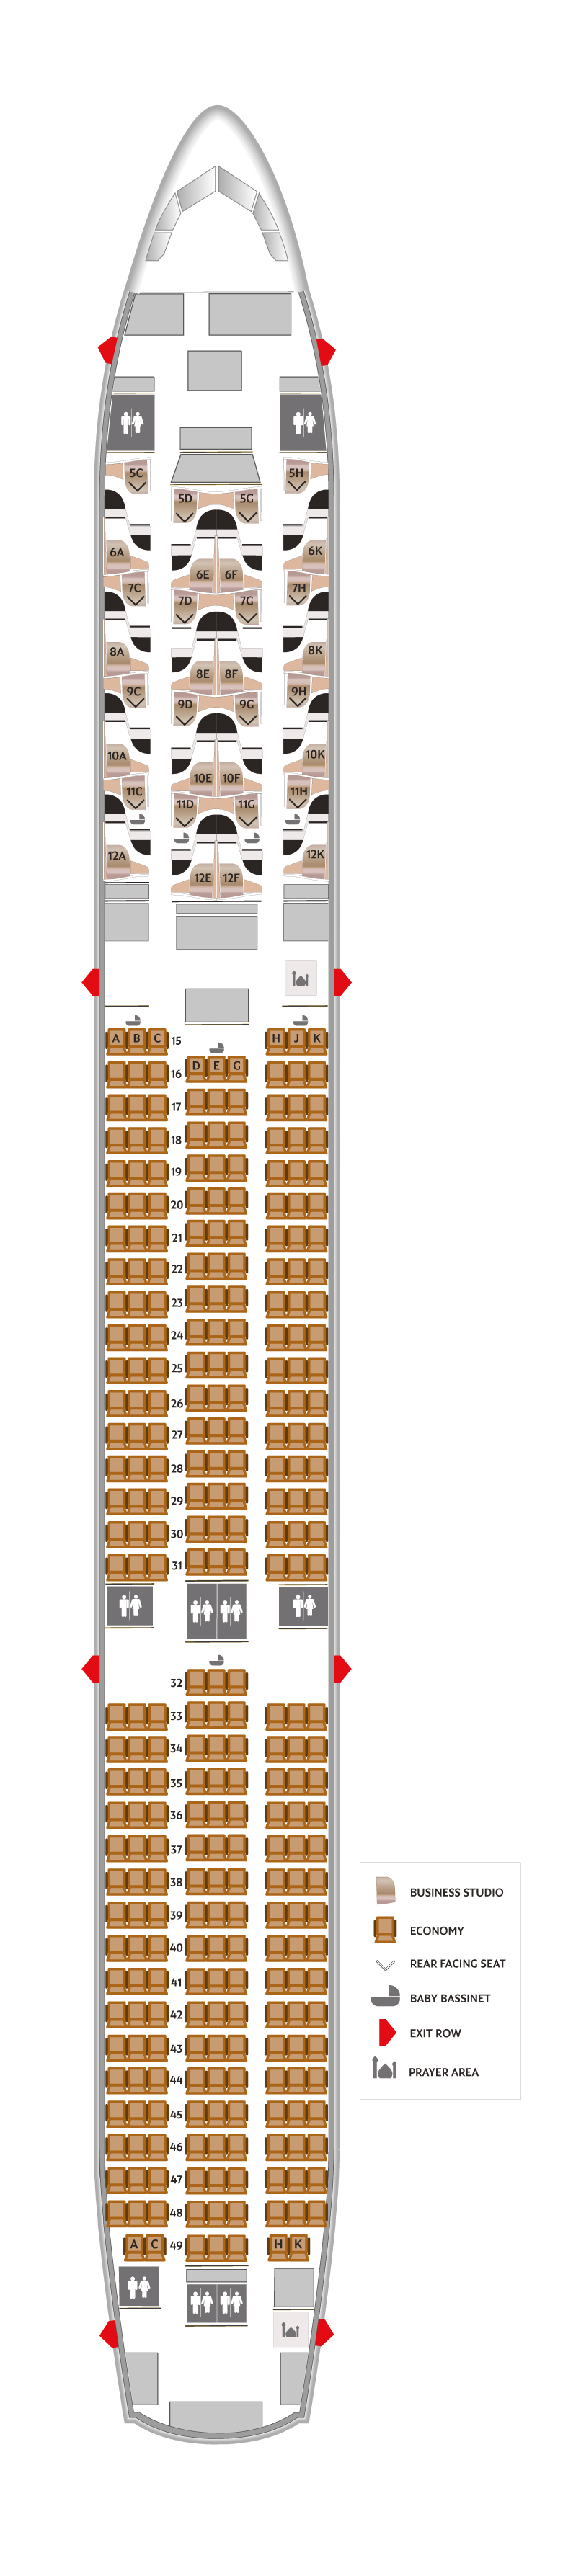 787 Dreamliner Seat Map